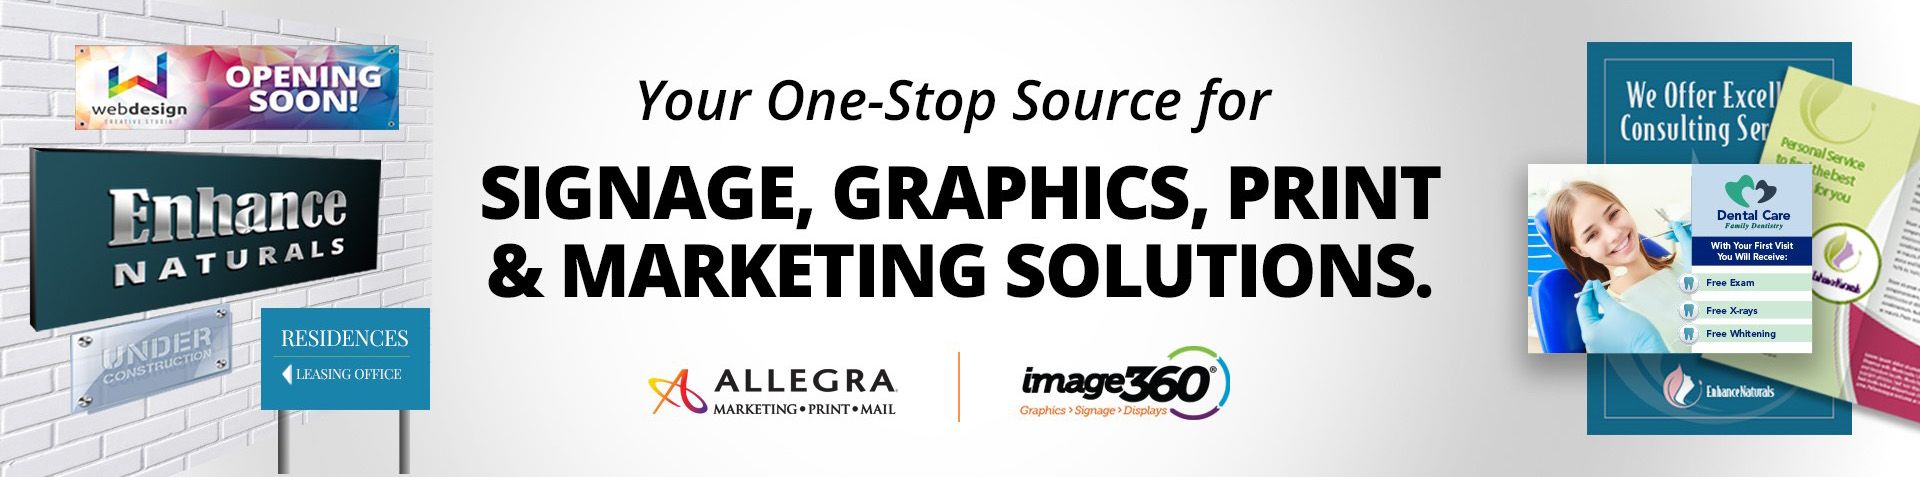 Allegra Marketing Print and Image360 Norfolk VA